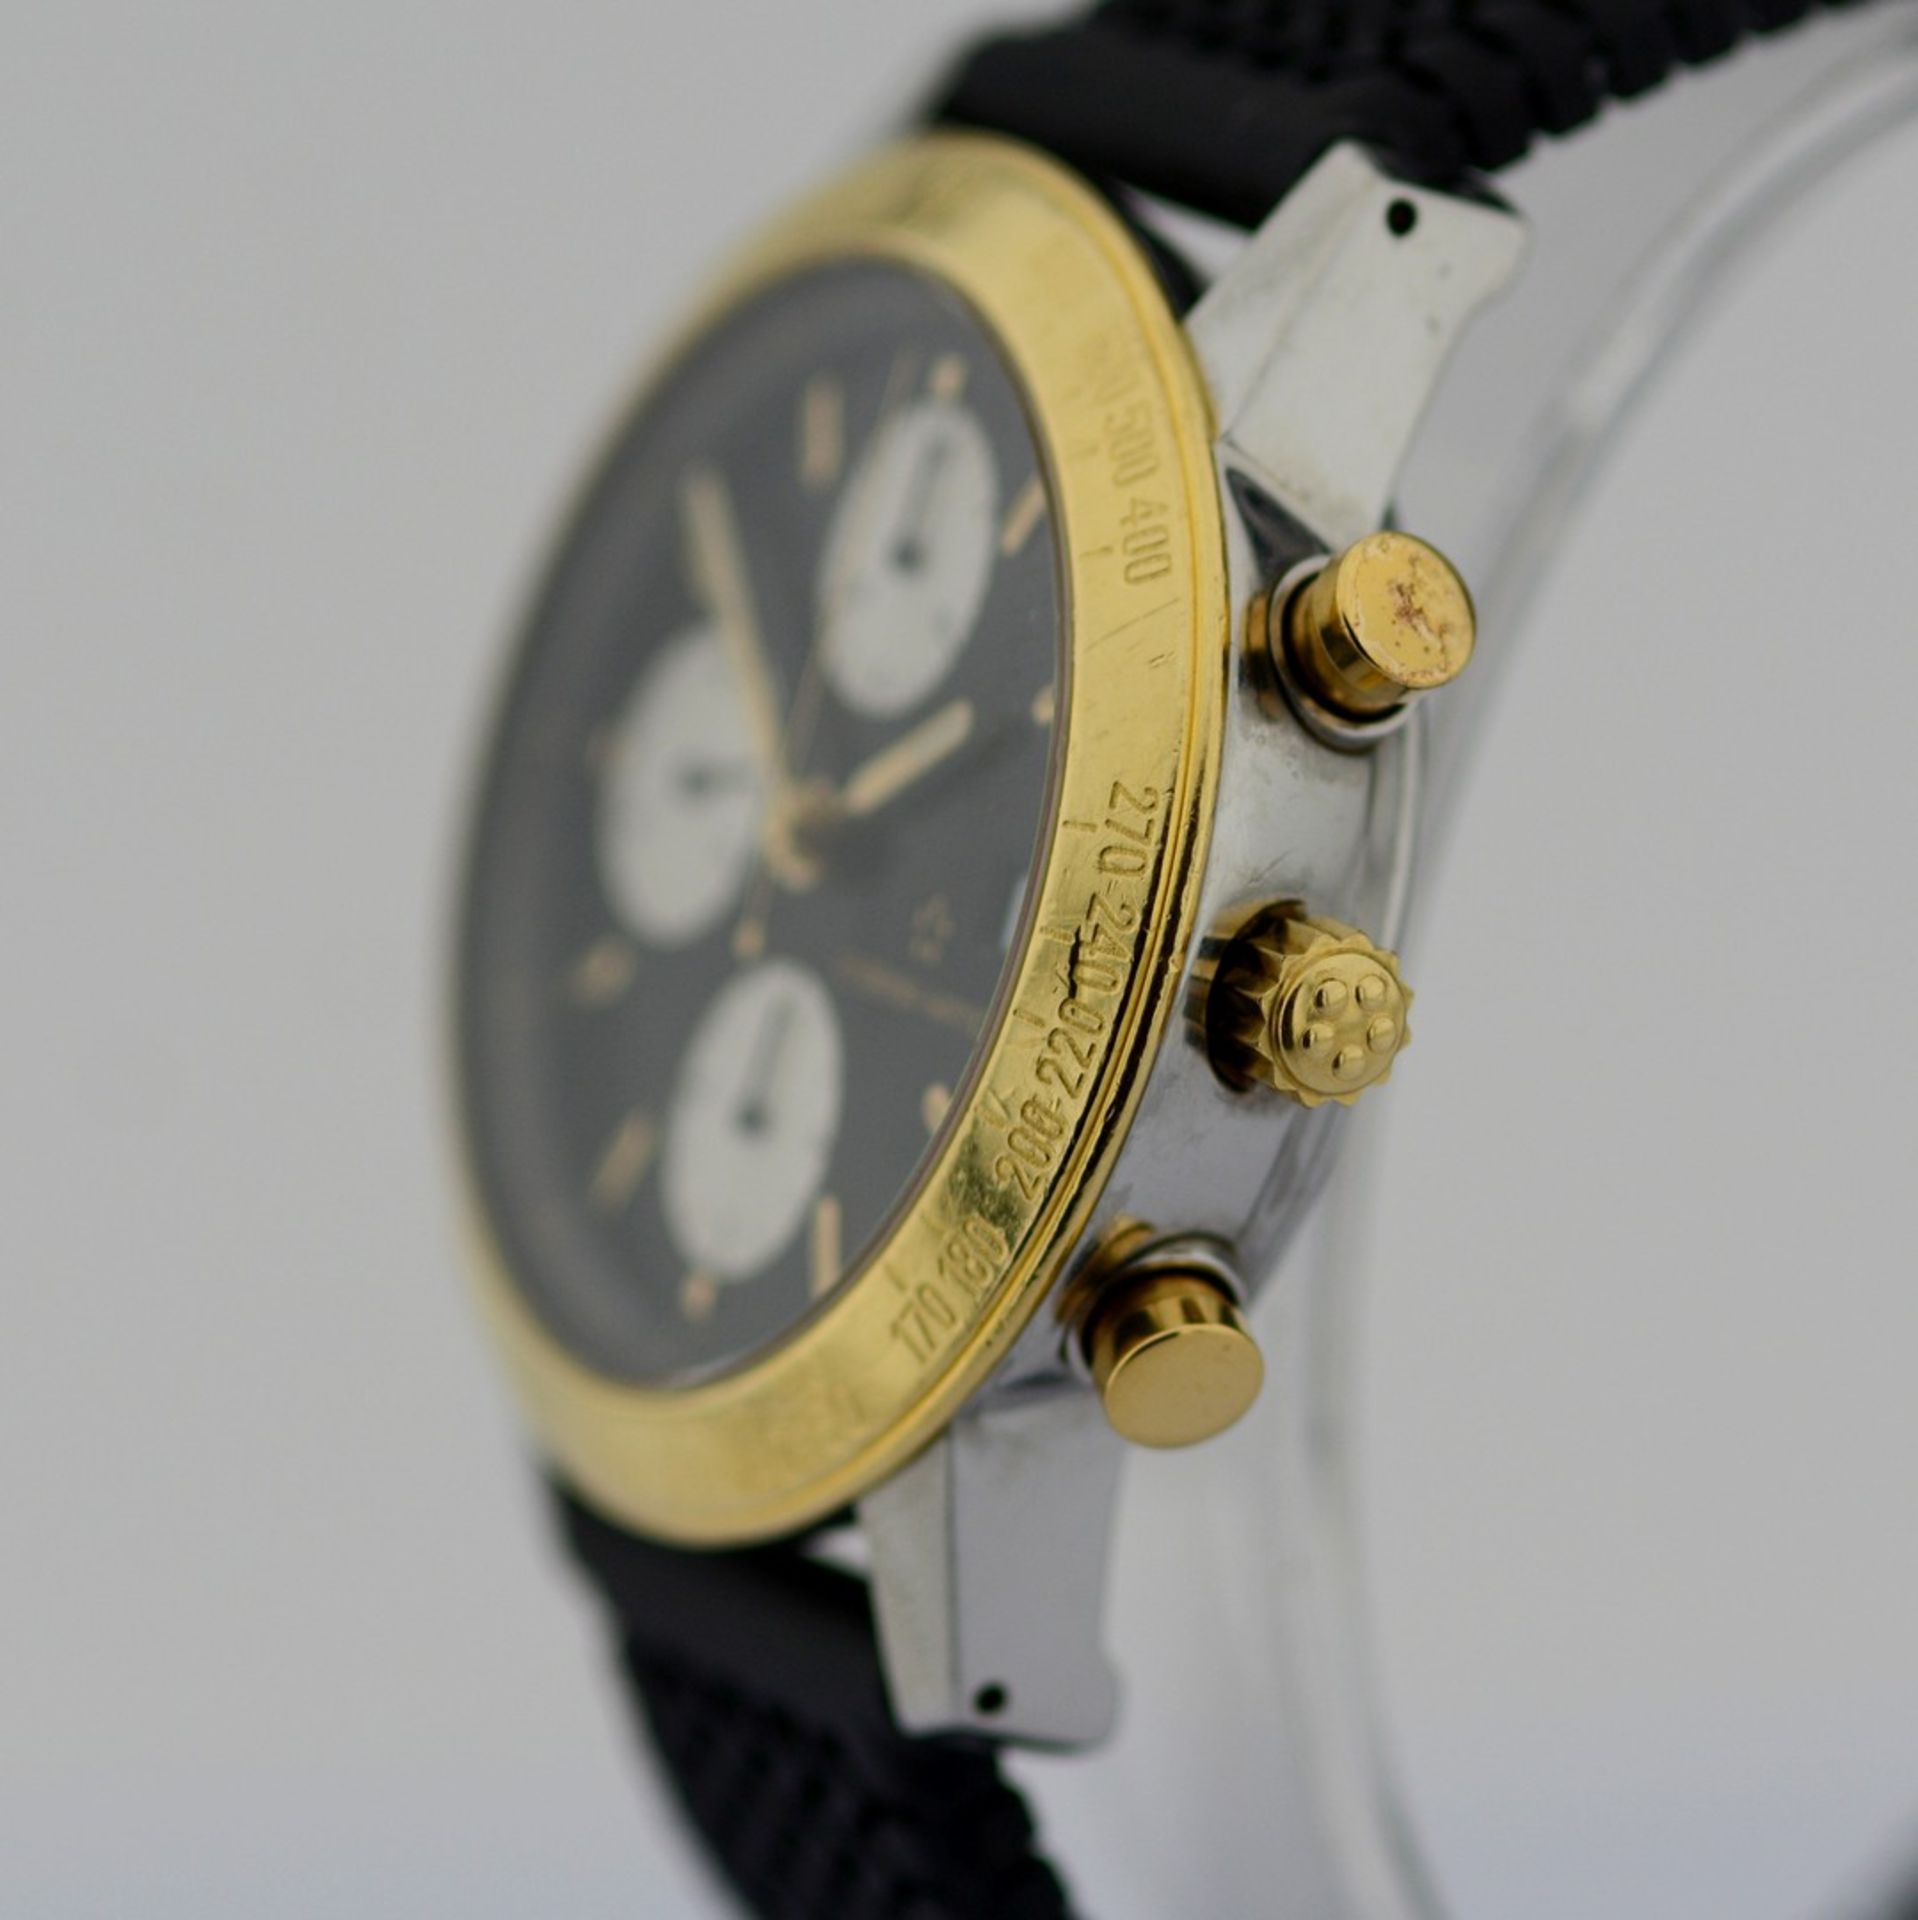 Eterna-Matic / Kontiki Chronograph - Gentlmen's Gold/Steel Wrist Watch - Image 8 of 10